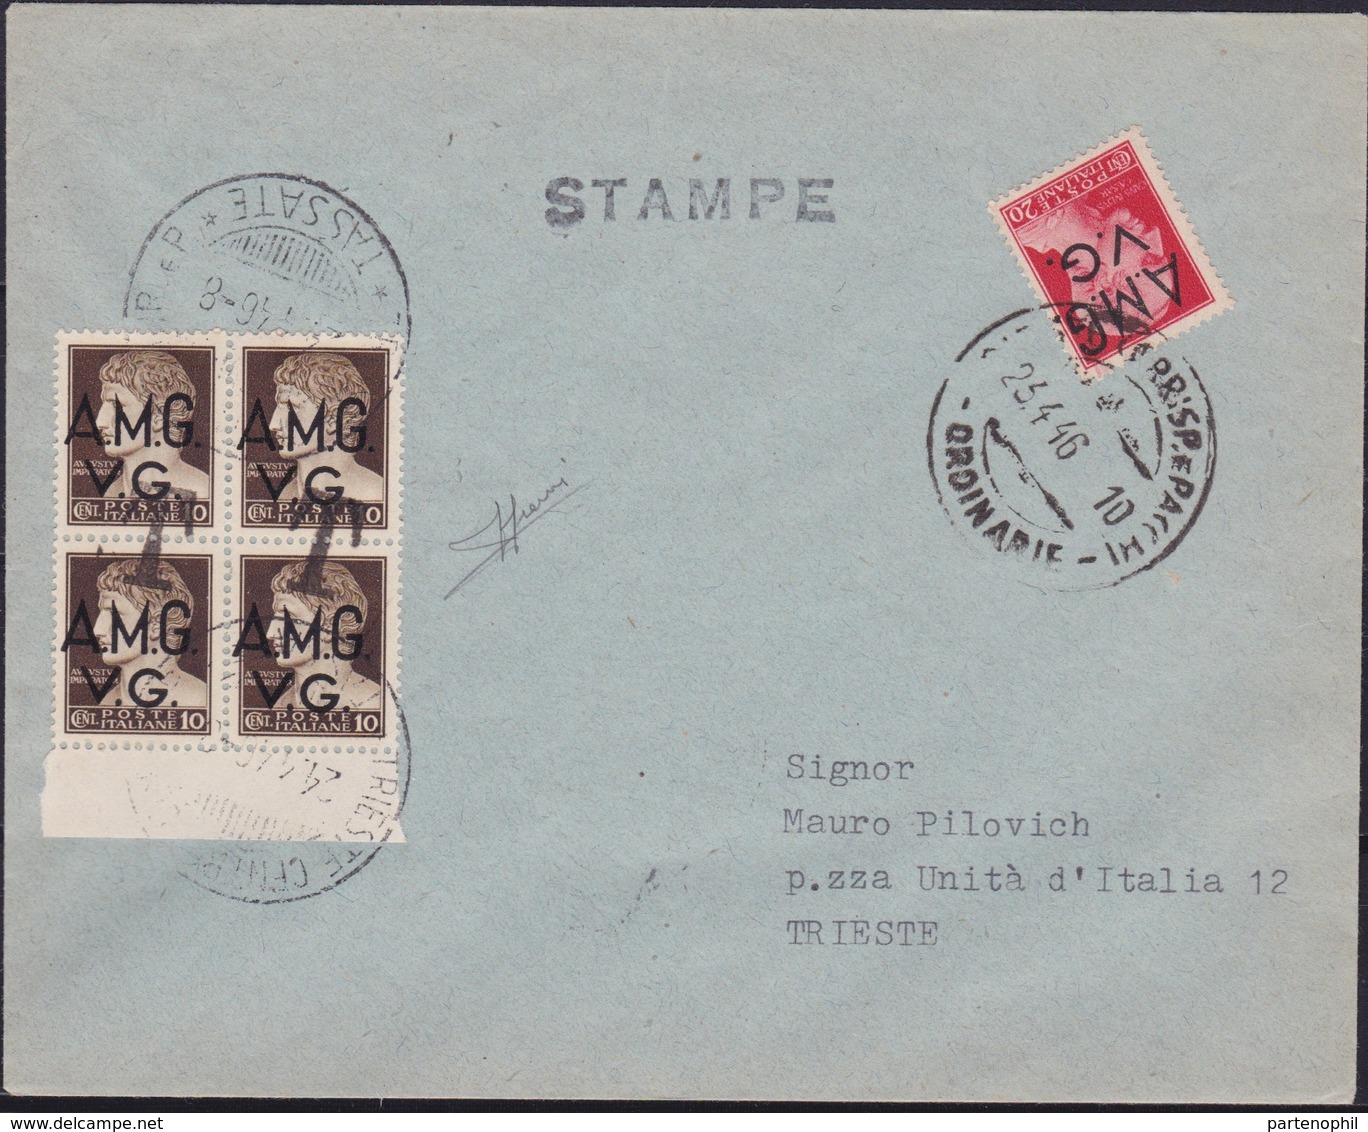 Venezia Giulia - 347 * Lettera Per Stampe Da Trieste Del 23.4.46 Per Città, Affrancata Con Imperiale Soprastampati A.M.G - Marcophilie